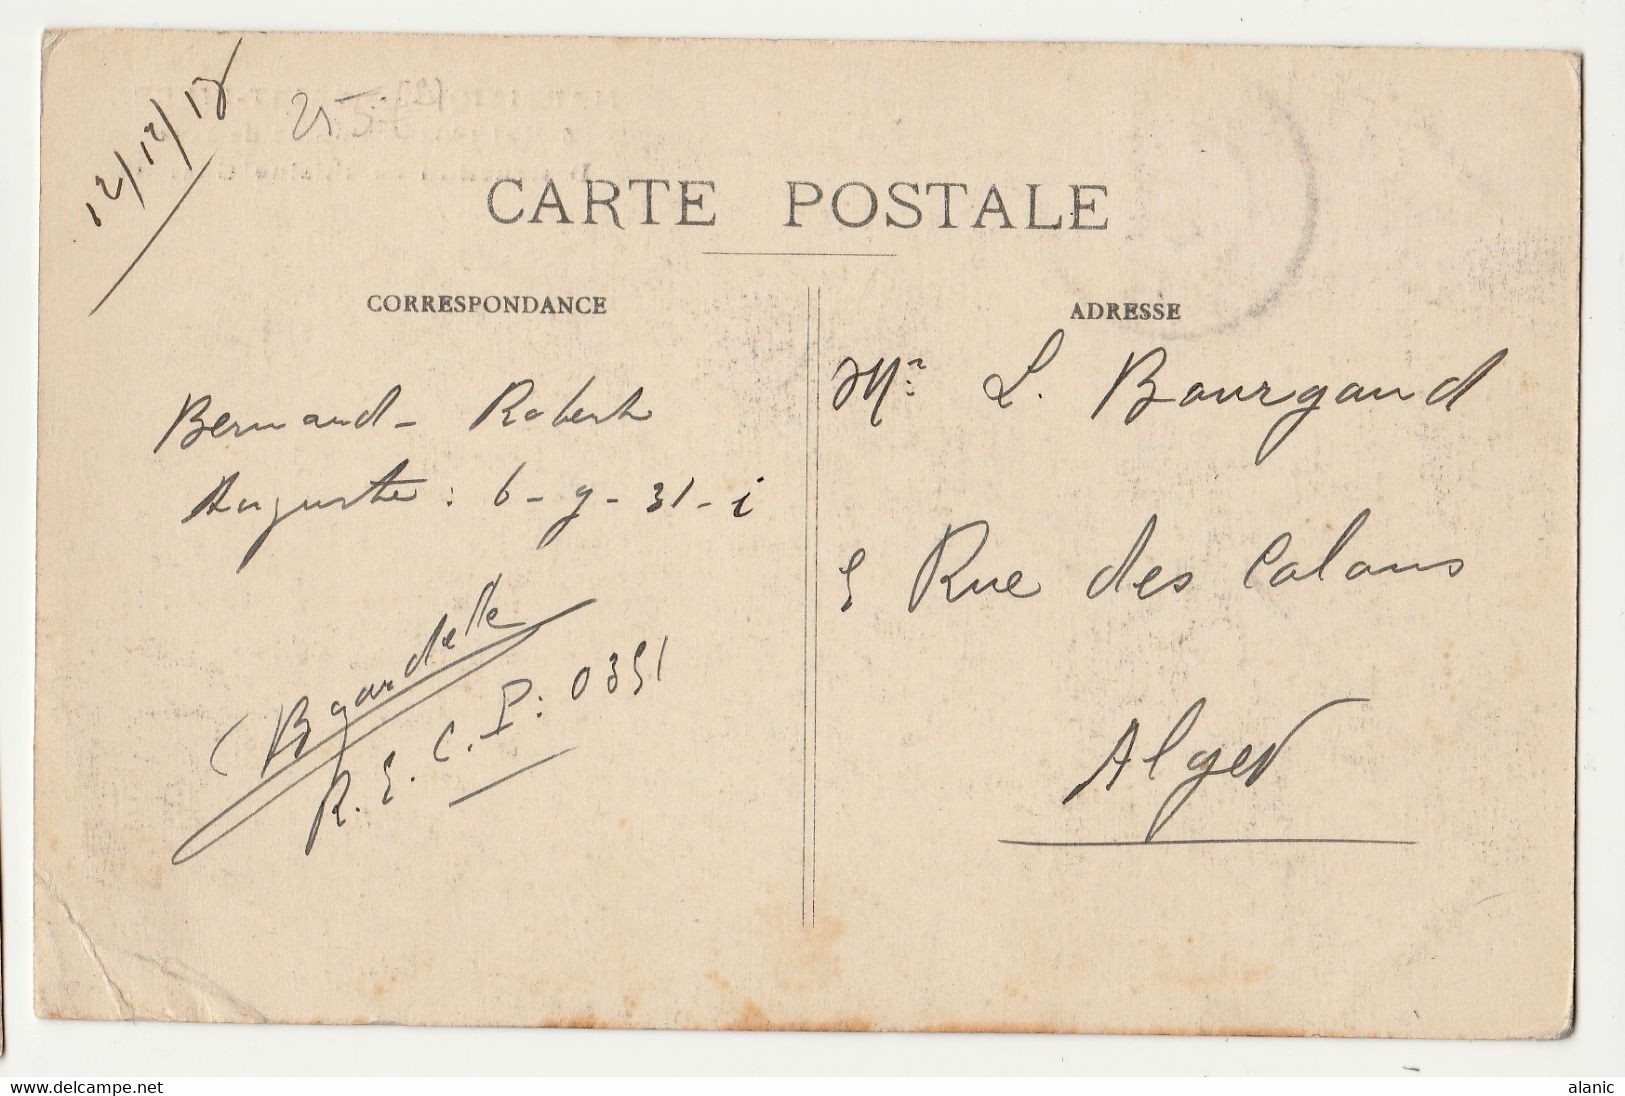 CPA-MARTINIQUE , SAINT PIERRE , 5 Mai 1902 , Coulée De Lave , Destruction De L' Usine Guérin+ TIMBRE - Otros & Sin Clasificación